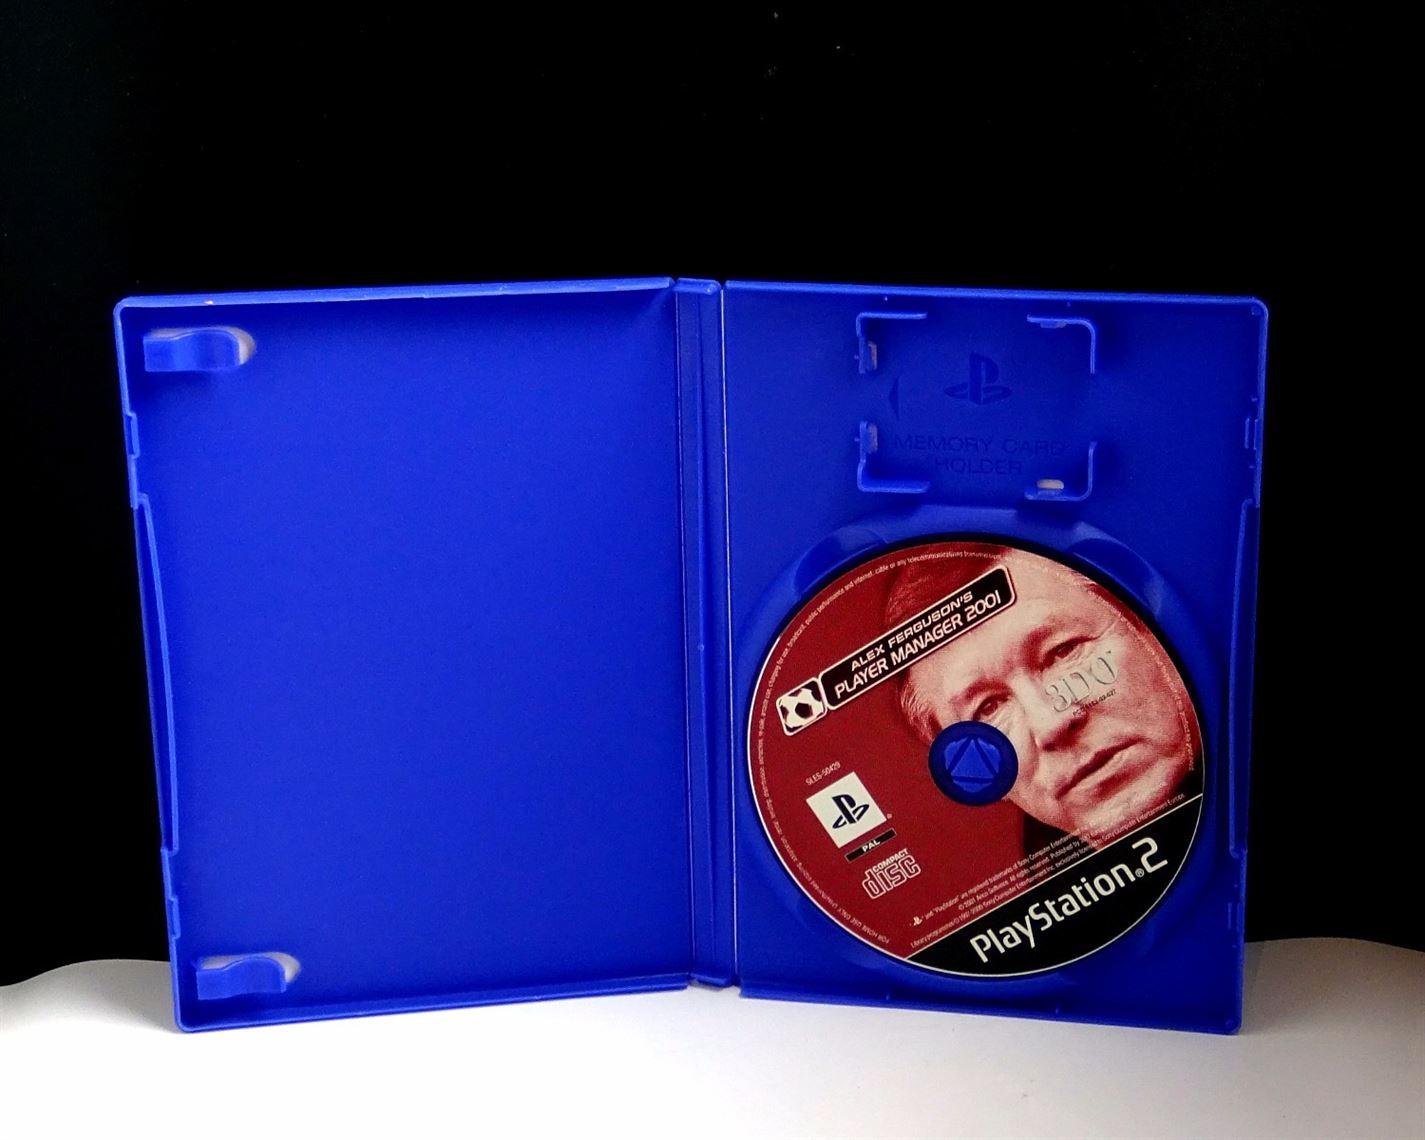 Alex Ferguson Player Manager 2001 PS2 (Playstation 2) - UK Seller